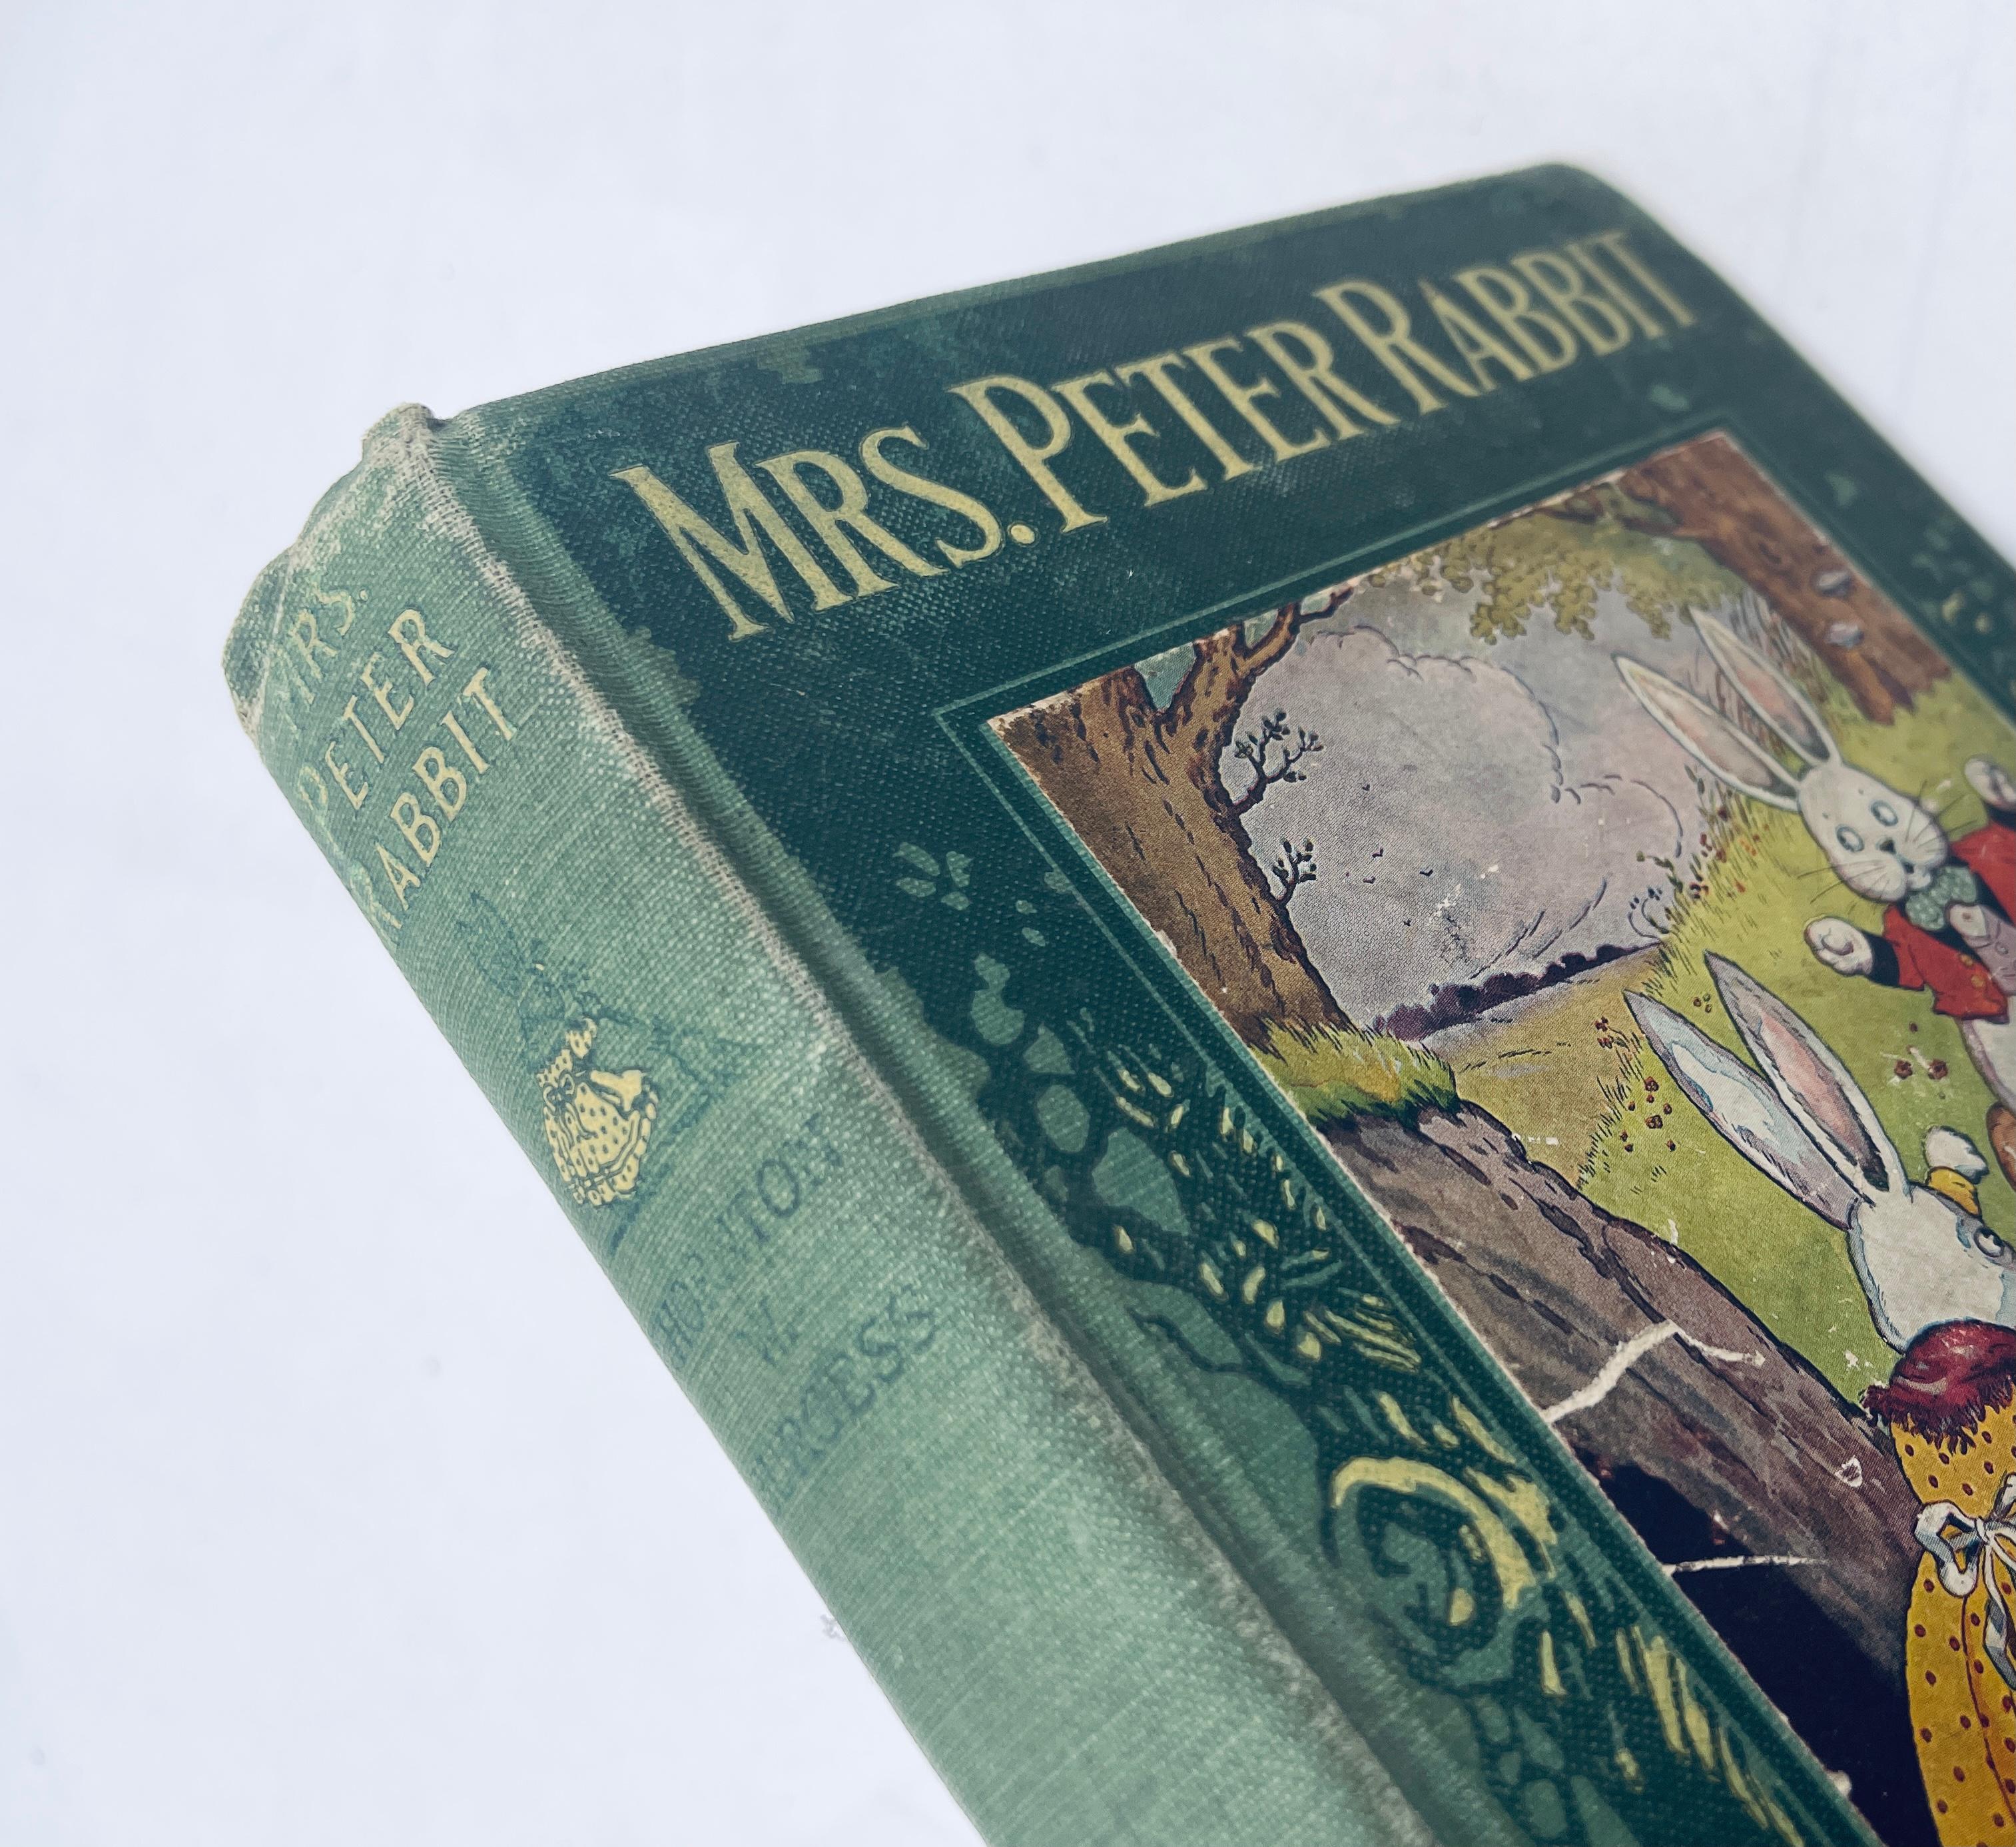 RARE MRS. PETER RABBIT by Thornton W. Burgess (1919) Illustrated